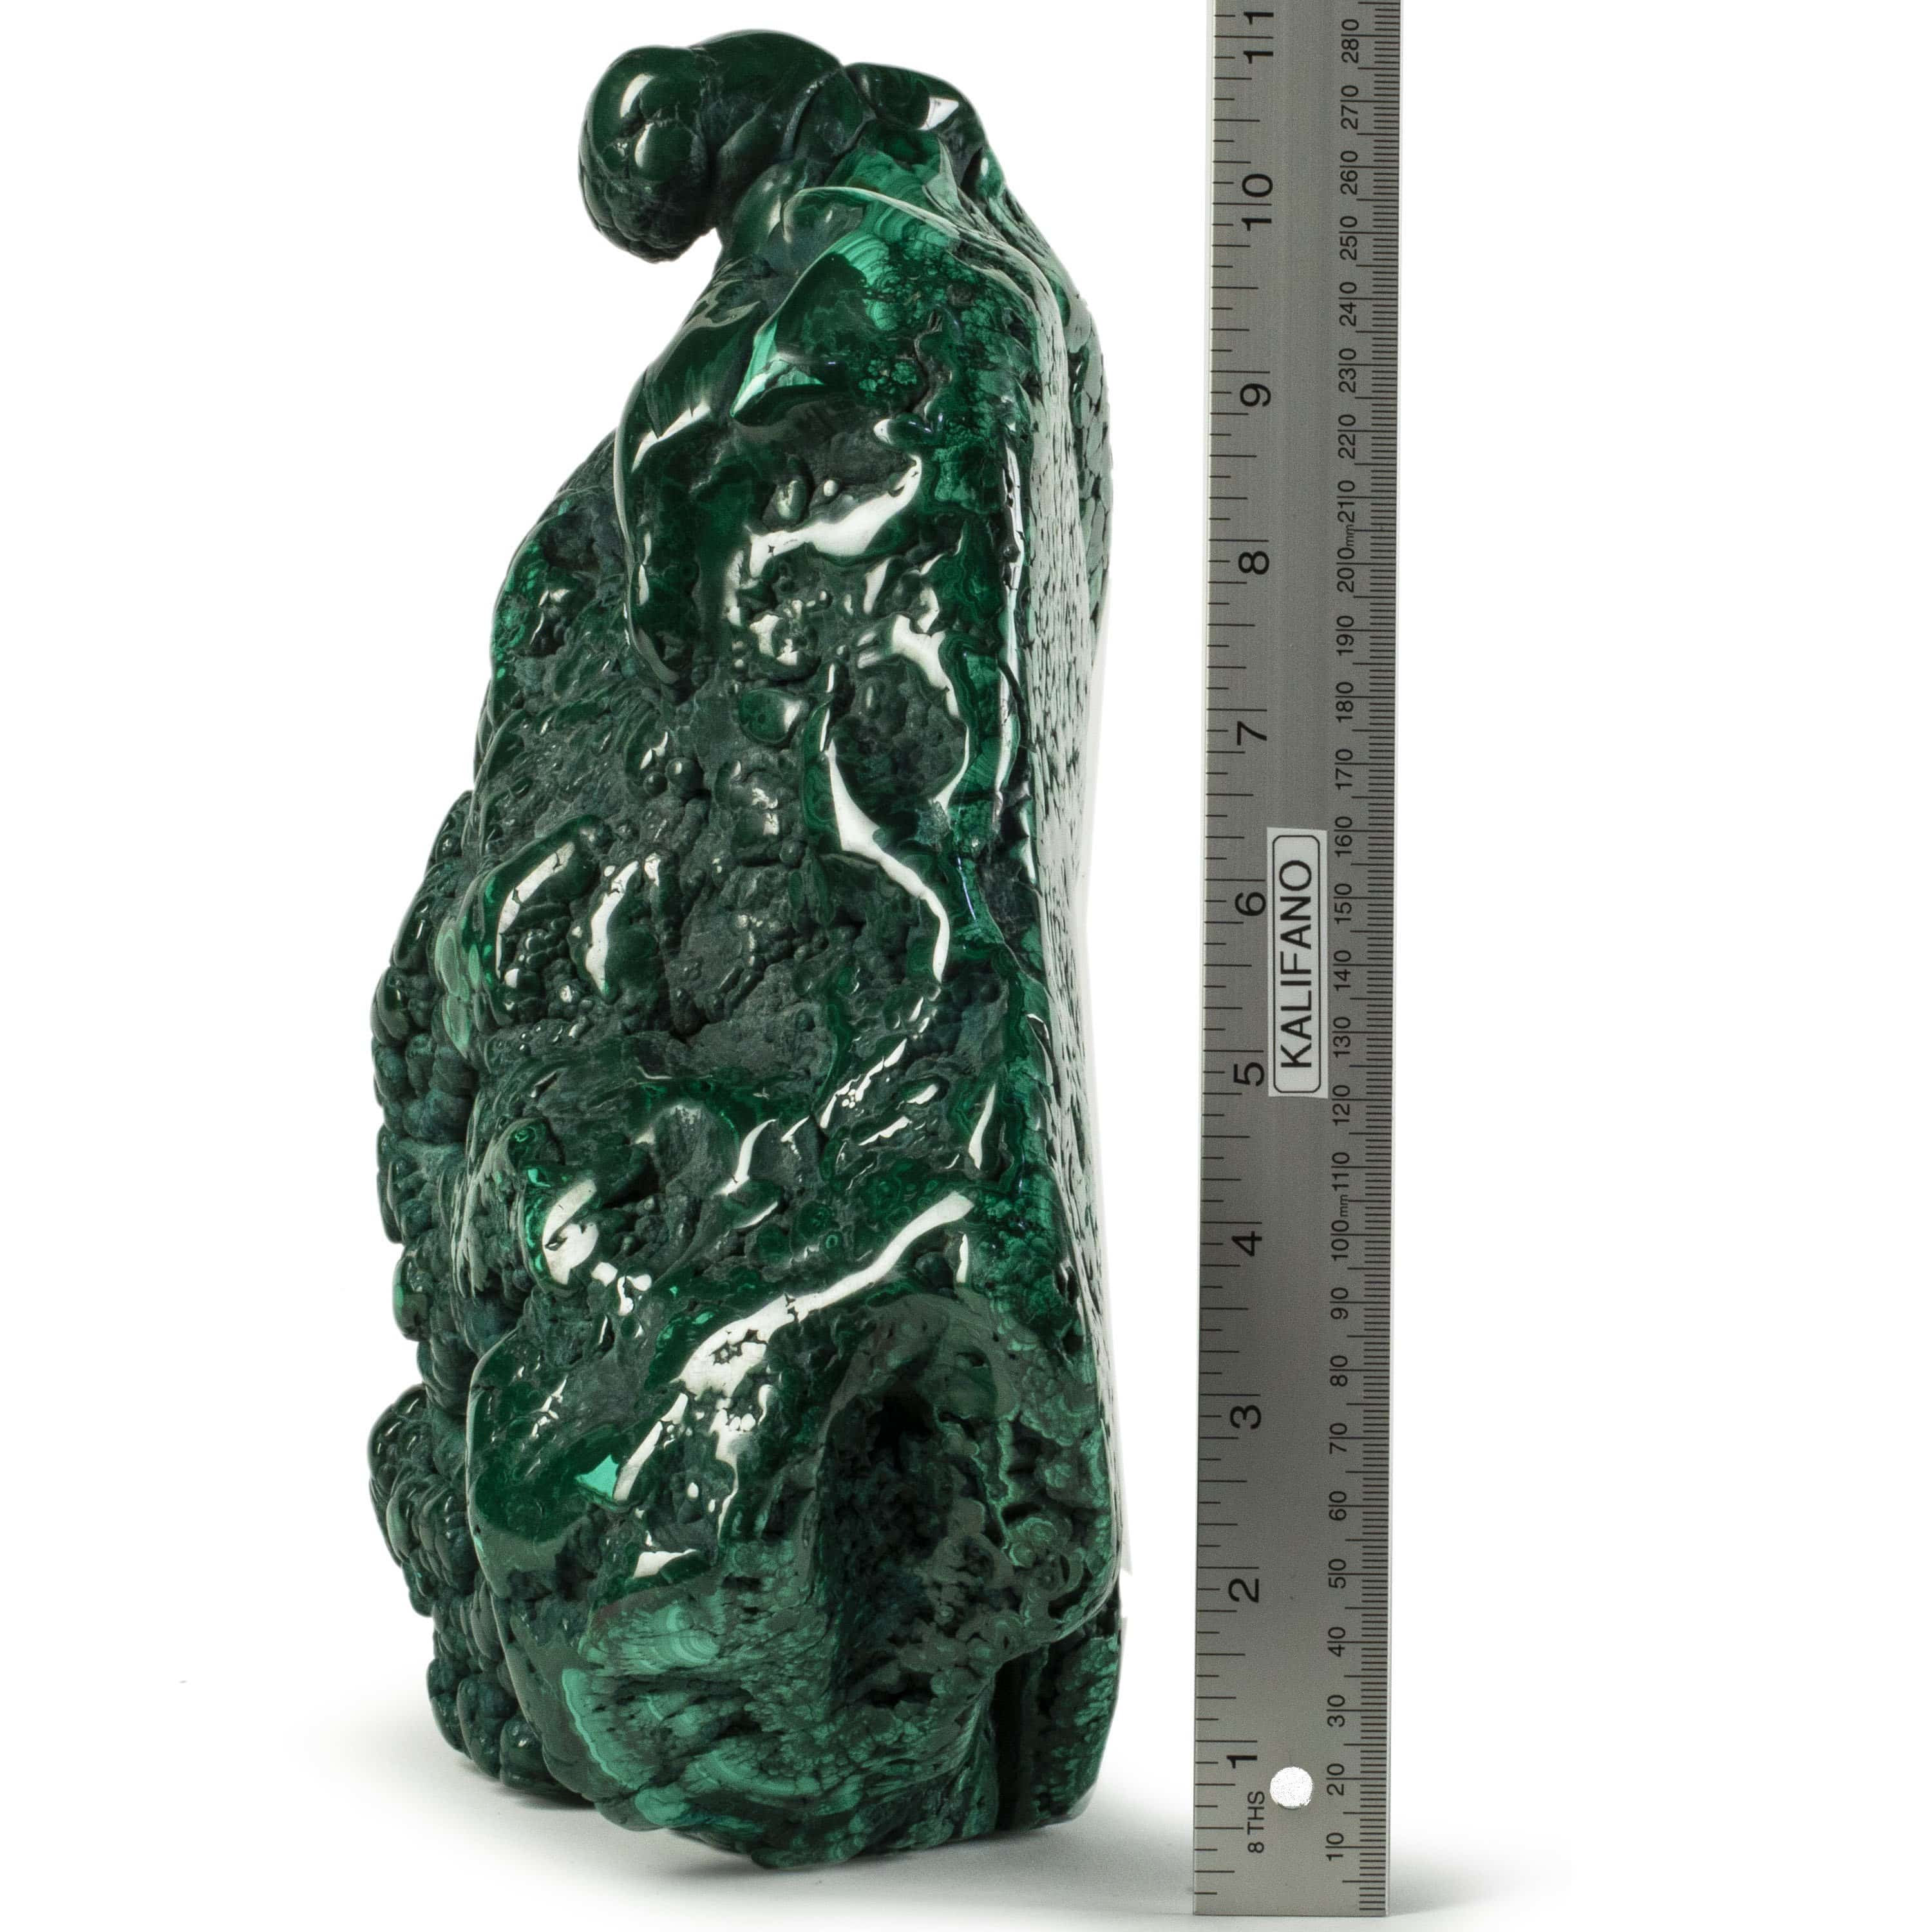 Kalifano Malachite Rare Natural Green Malachite Polished Freeform Specimen from Congo - 16.7 kg / 36.9 lbs MA11500.001